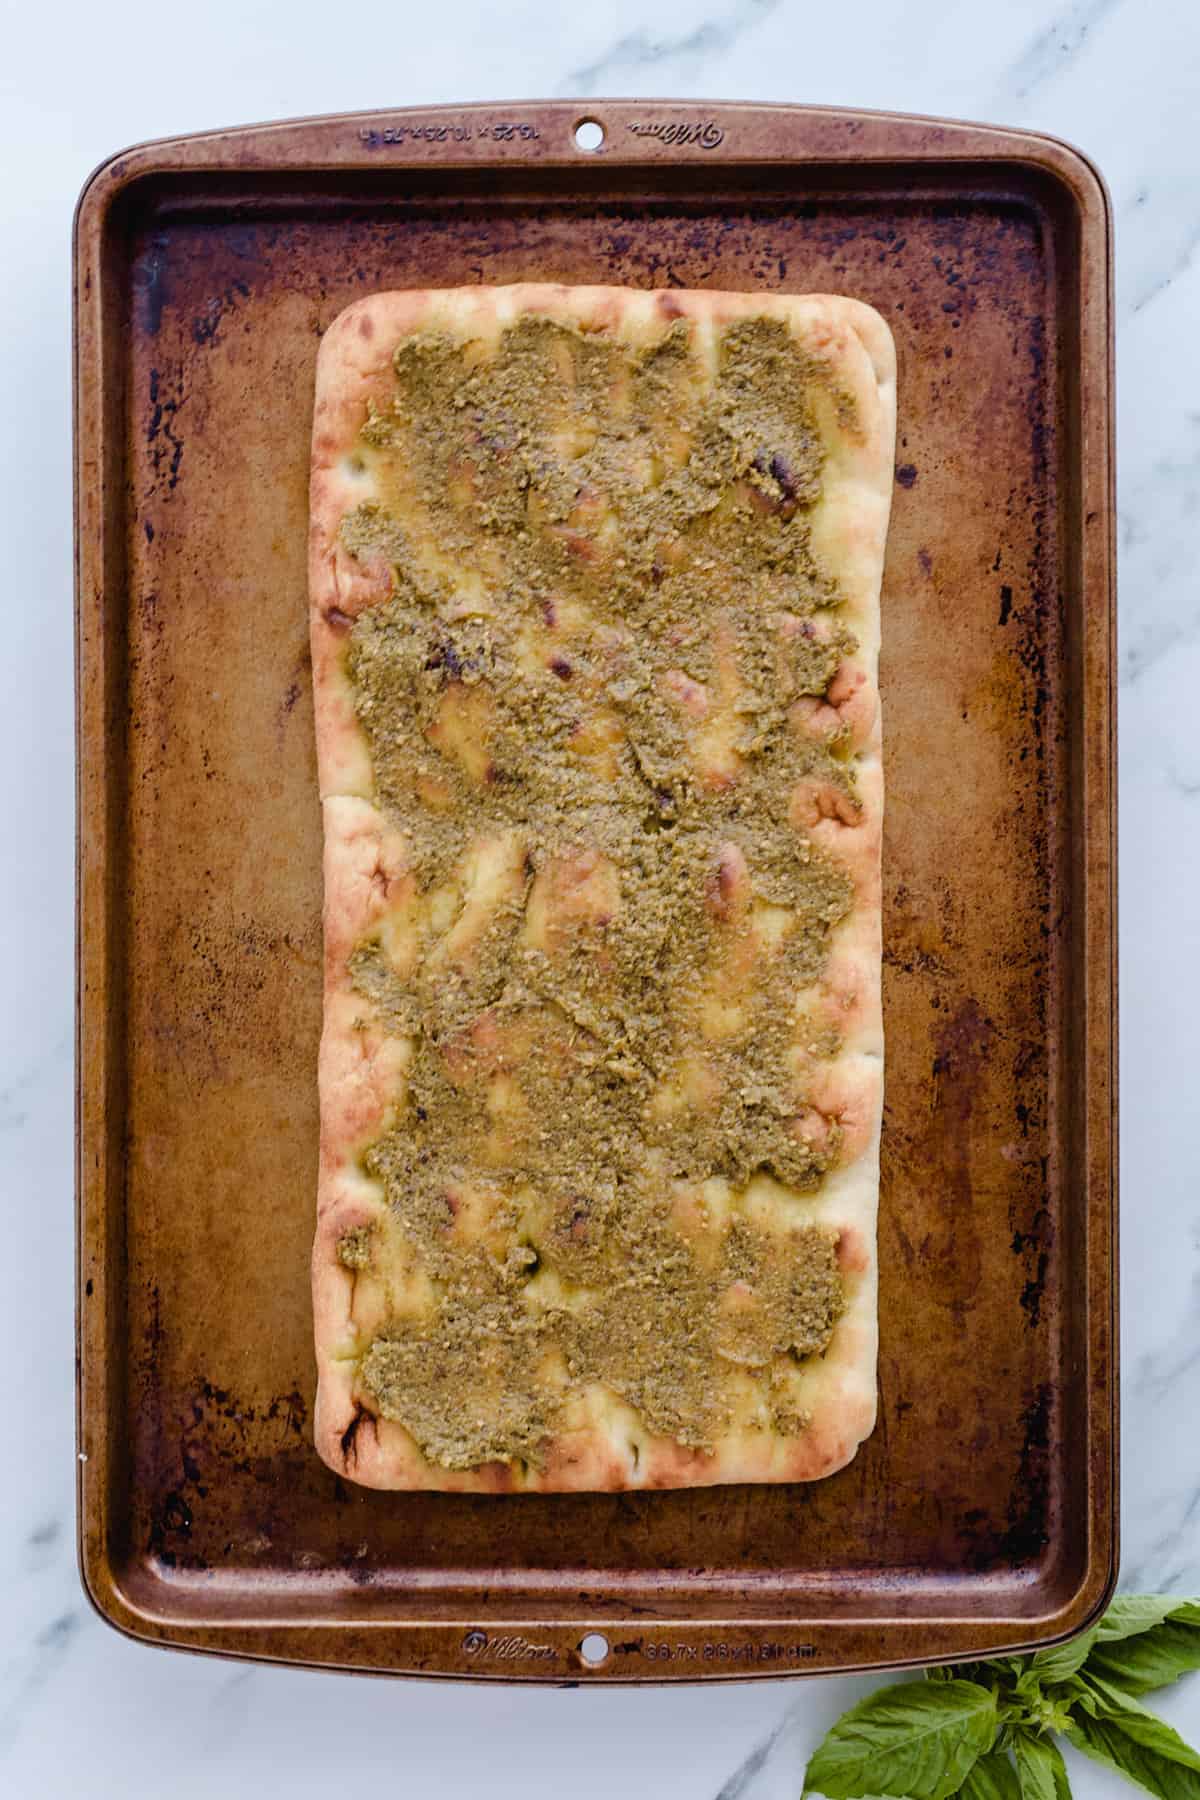 Pesto spread on top of flatbread on baking sheet